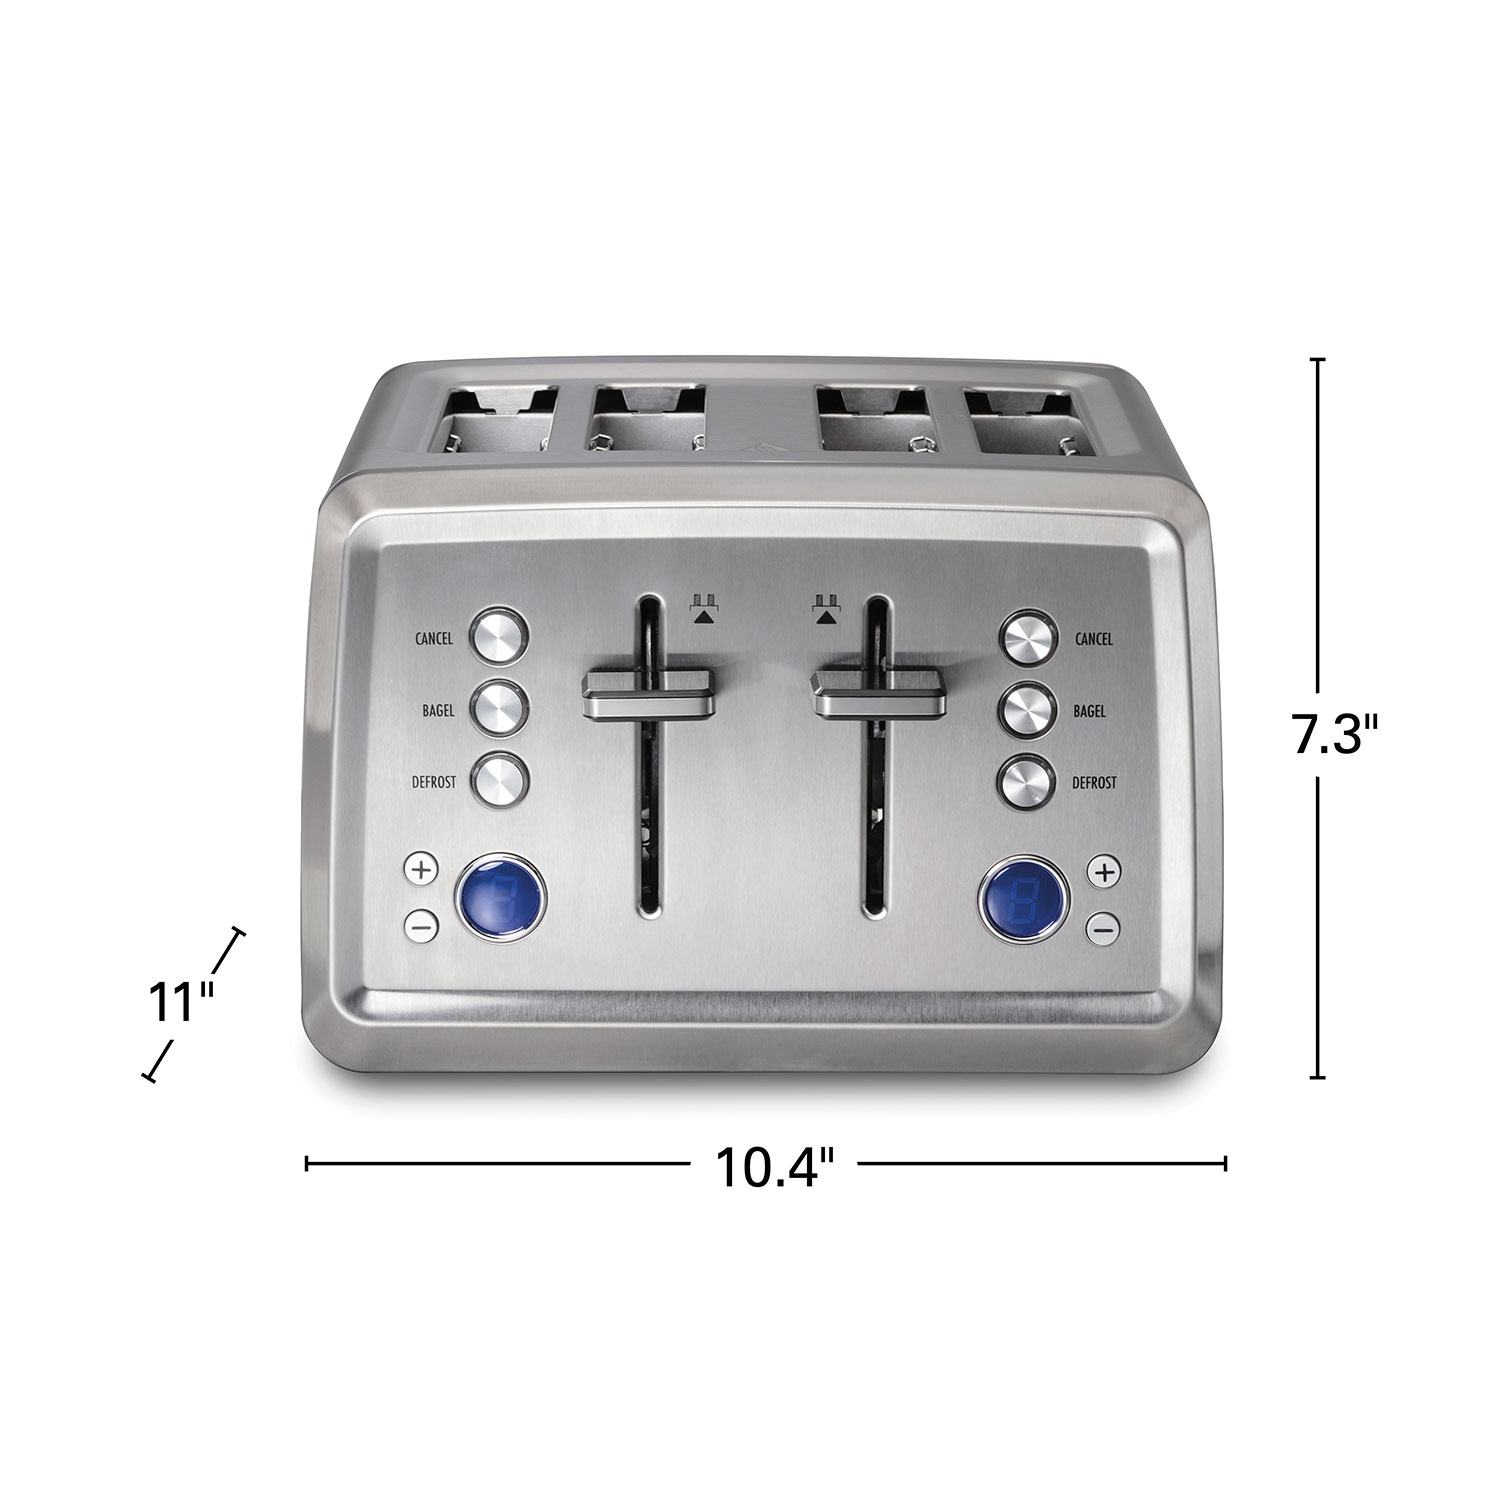 Cuisinart 4-Slice Digital Toaster